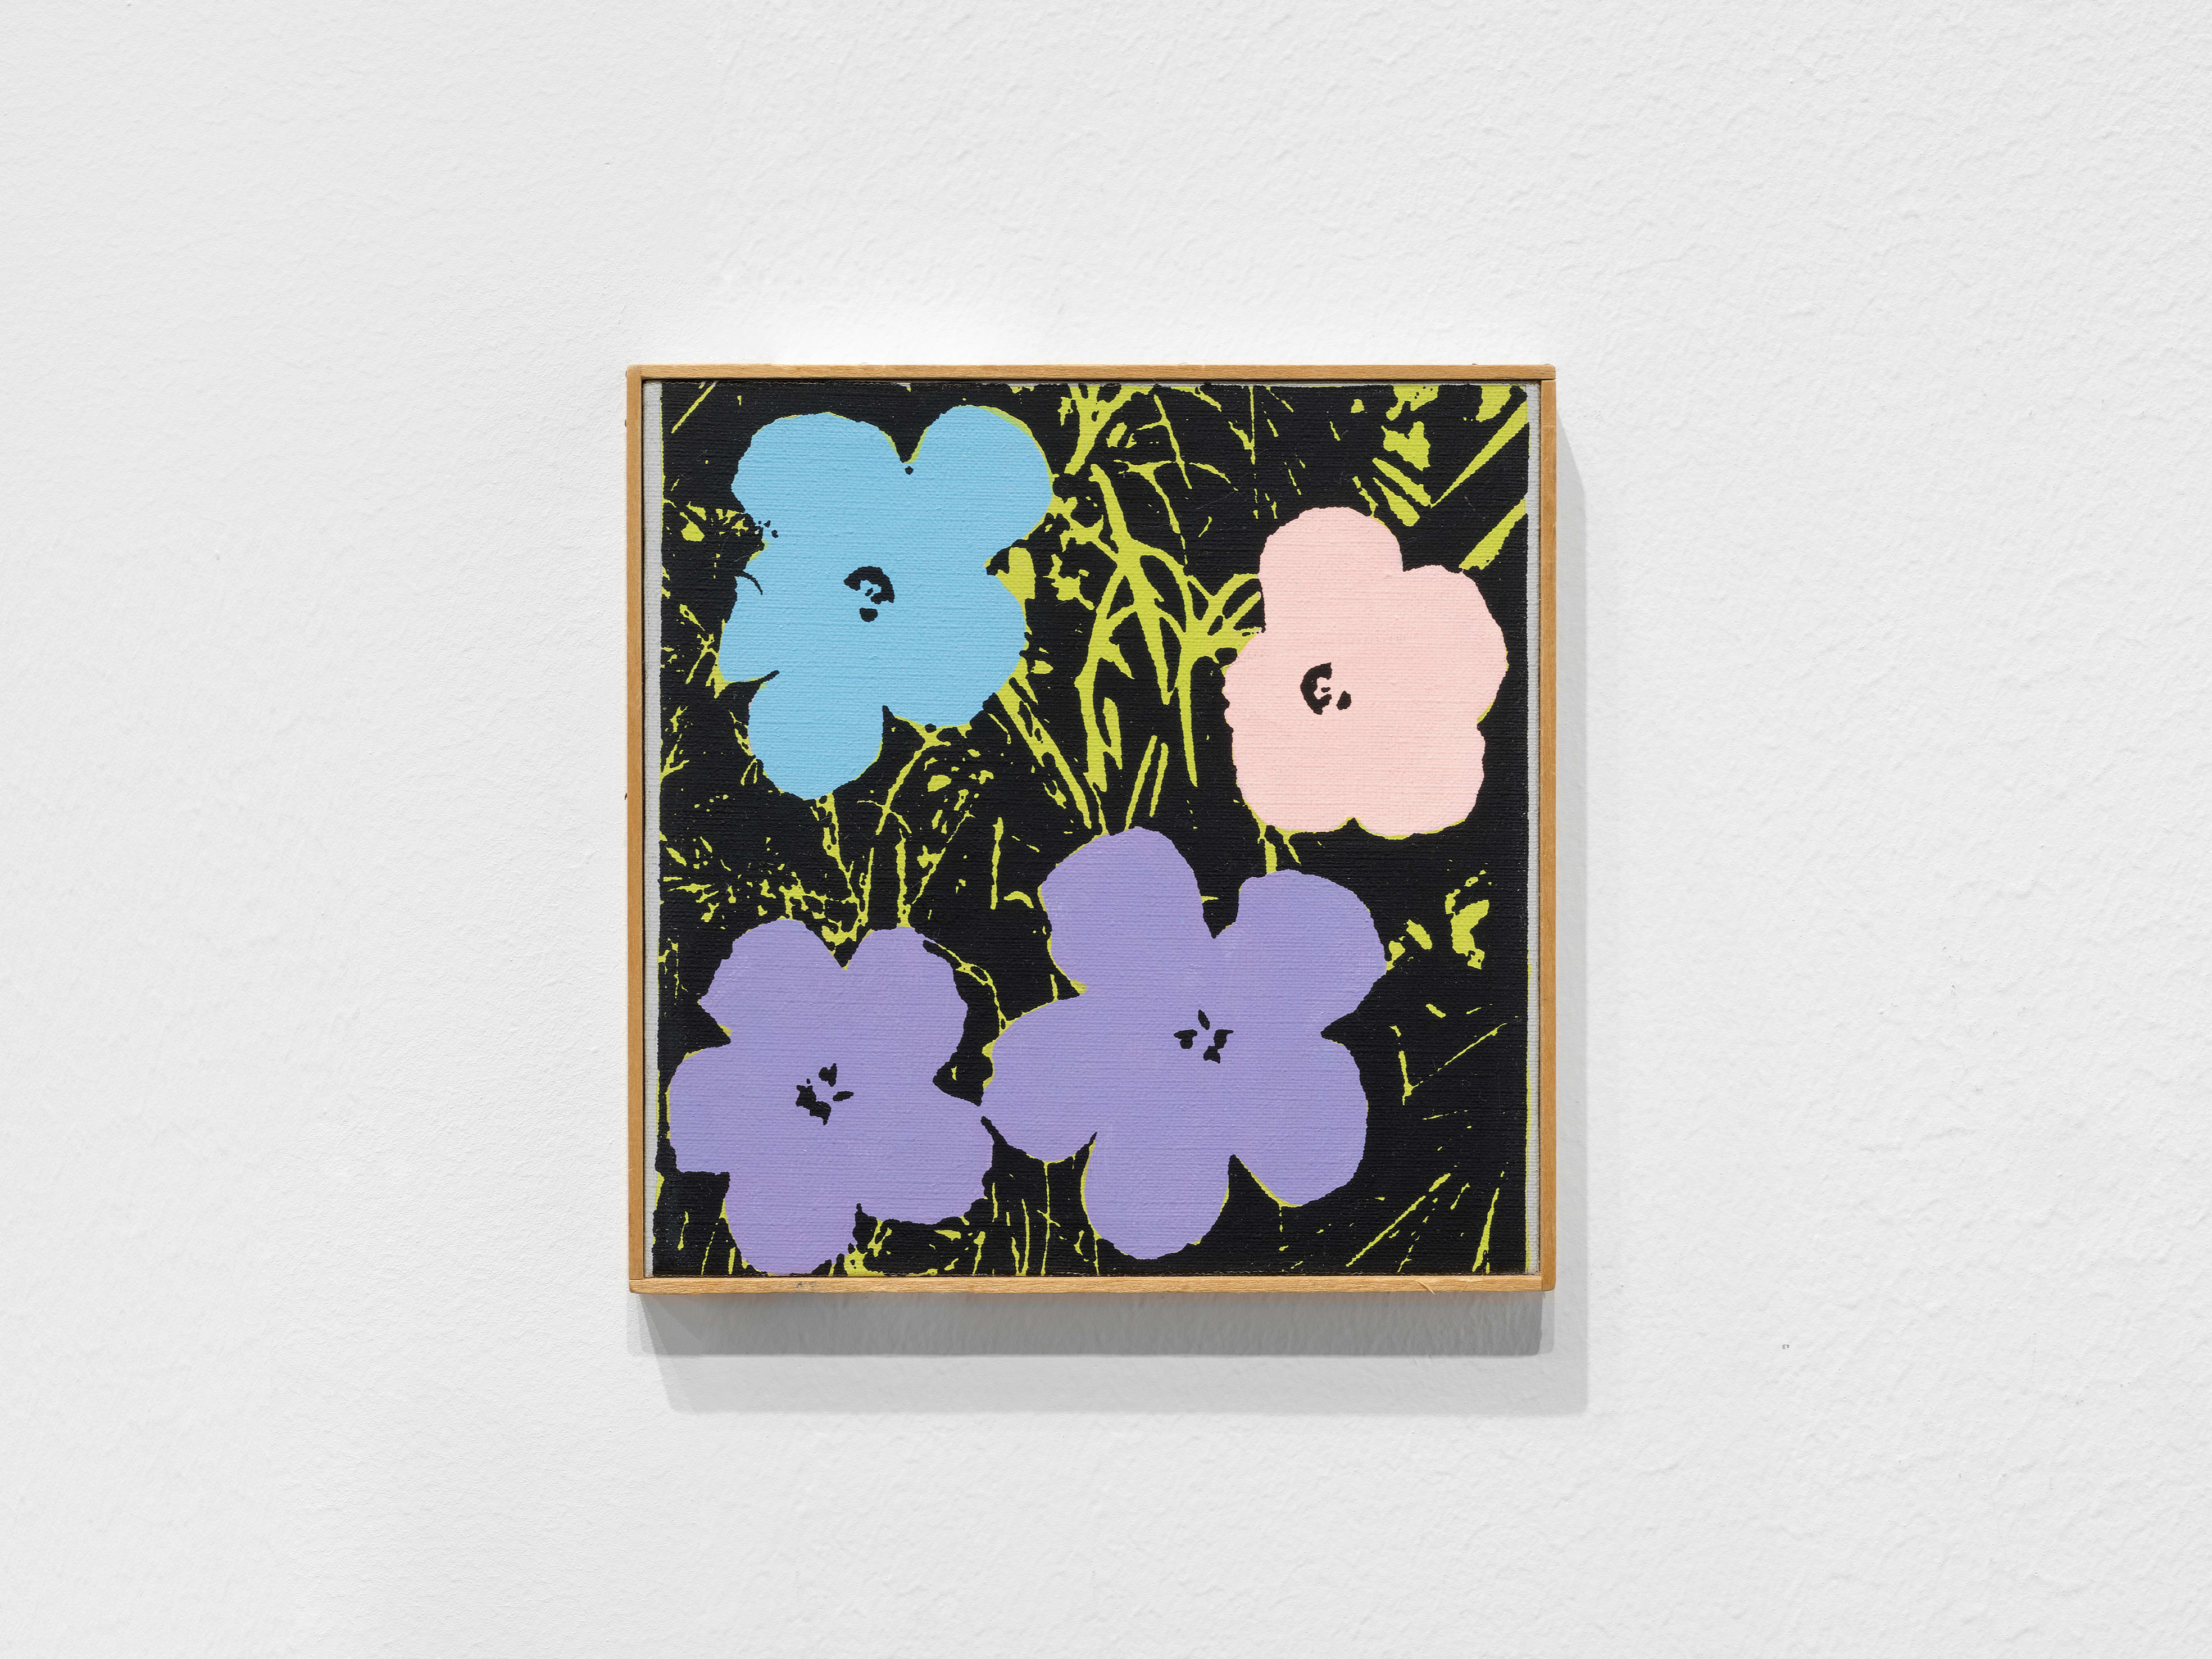 Andy Warhol, Flowers, 1964